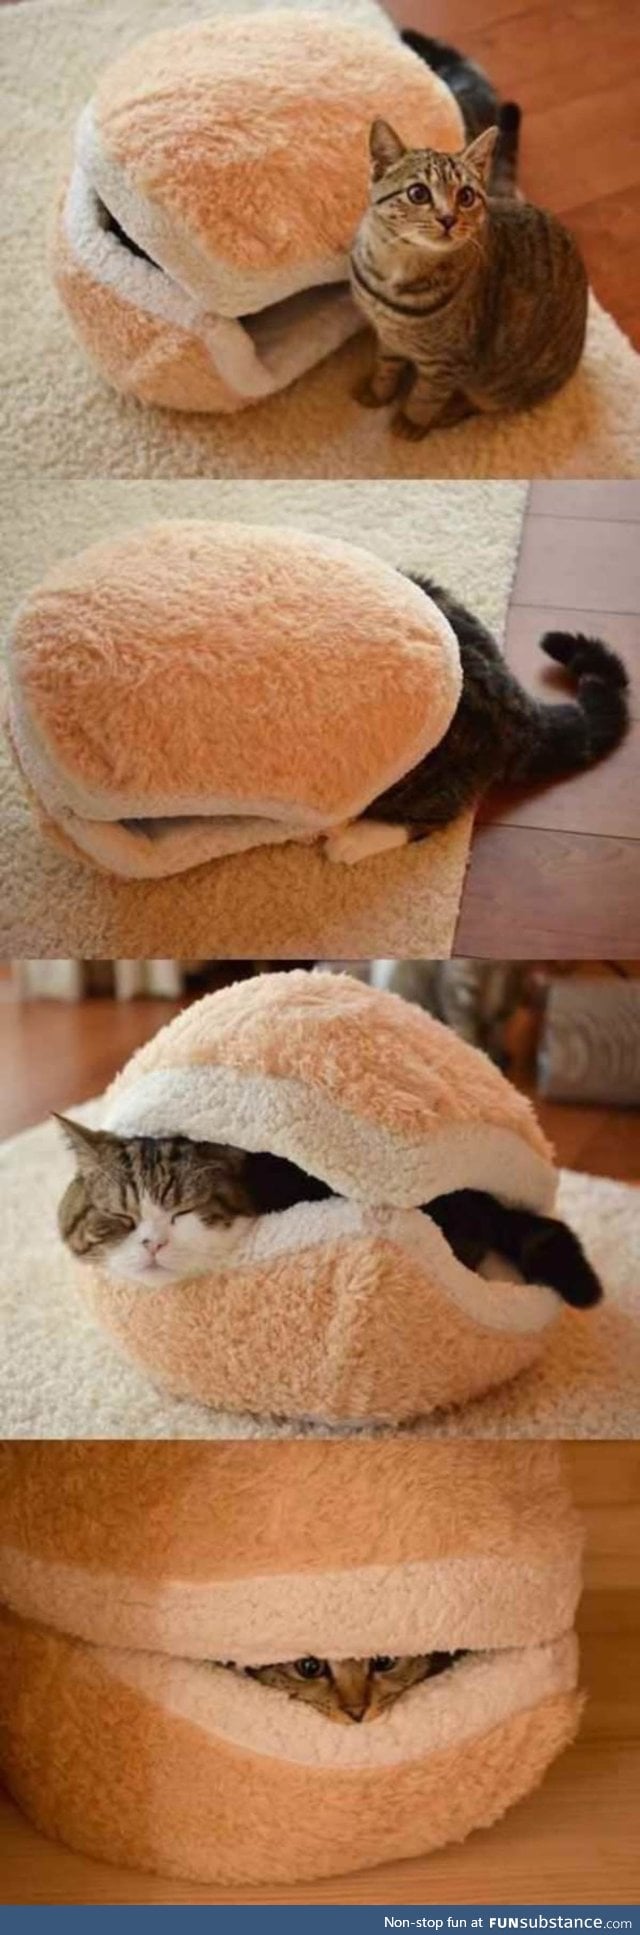 The cat comforter